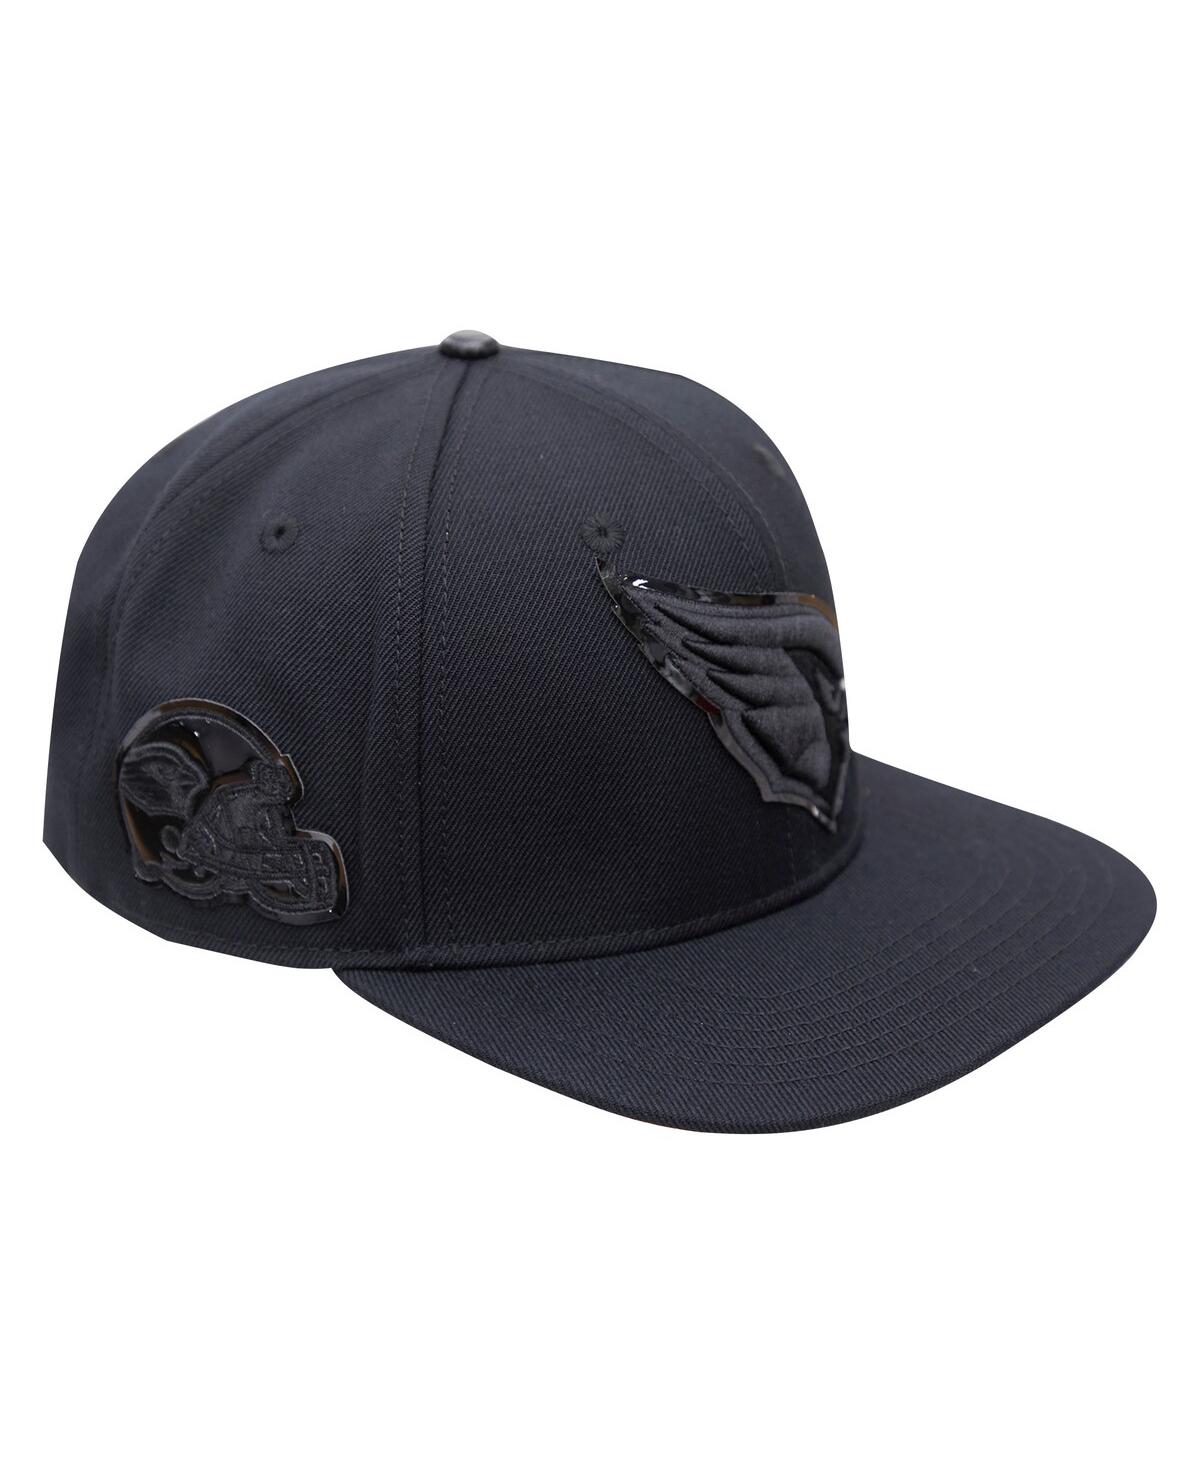 Men's Pro Standard Gray/Black Las Vegas Raiders 2Tone Snapback Hat